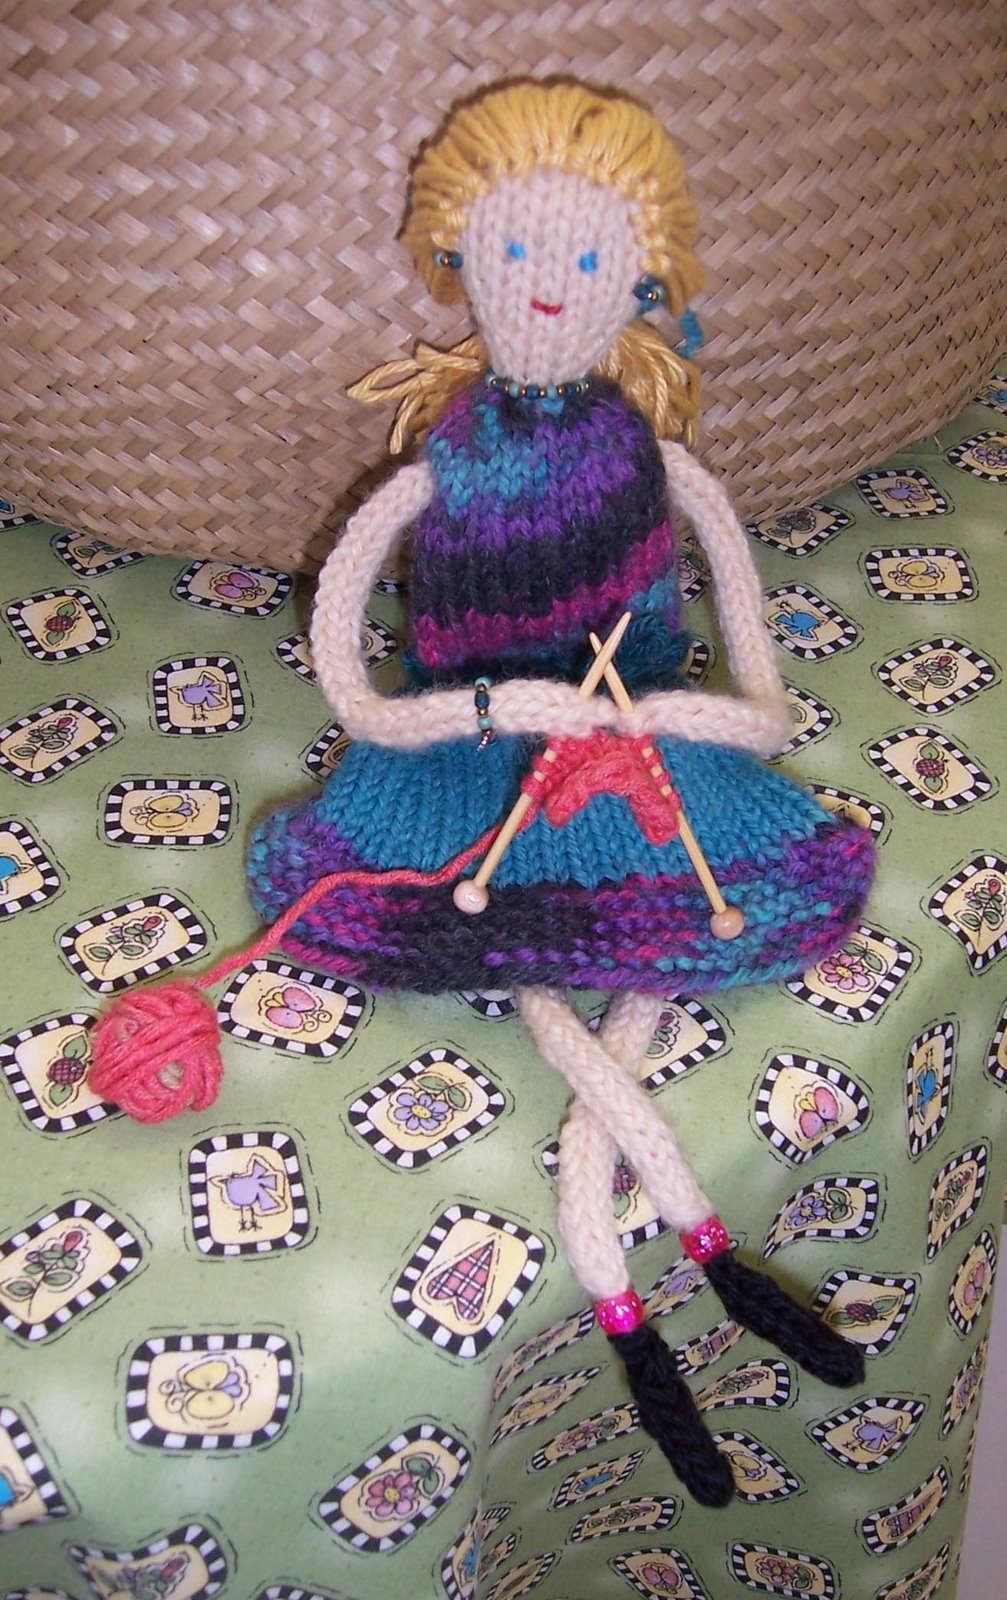 [My+knitting+doll.jpg]